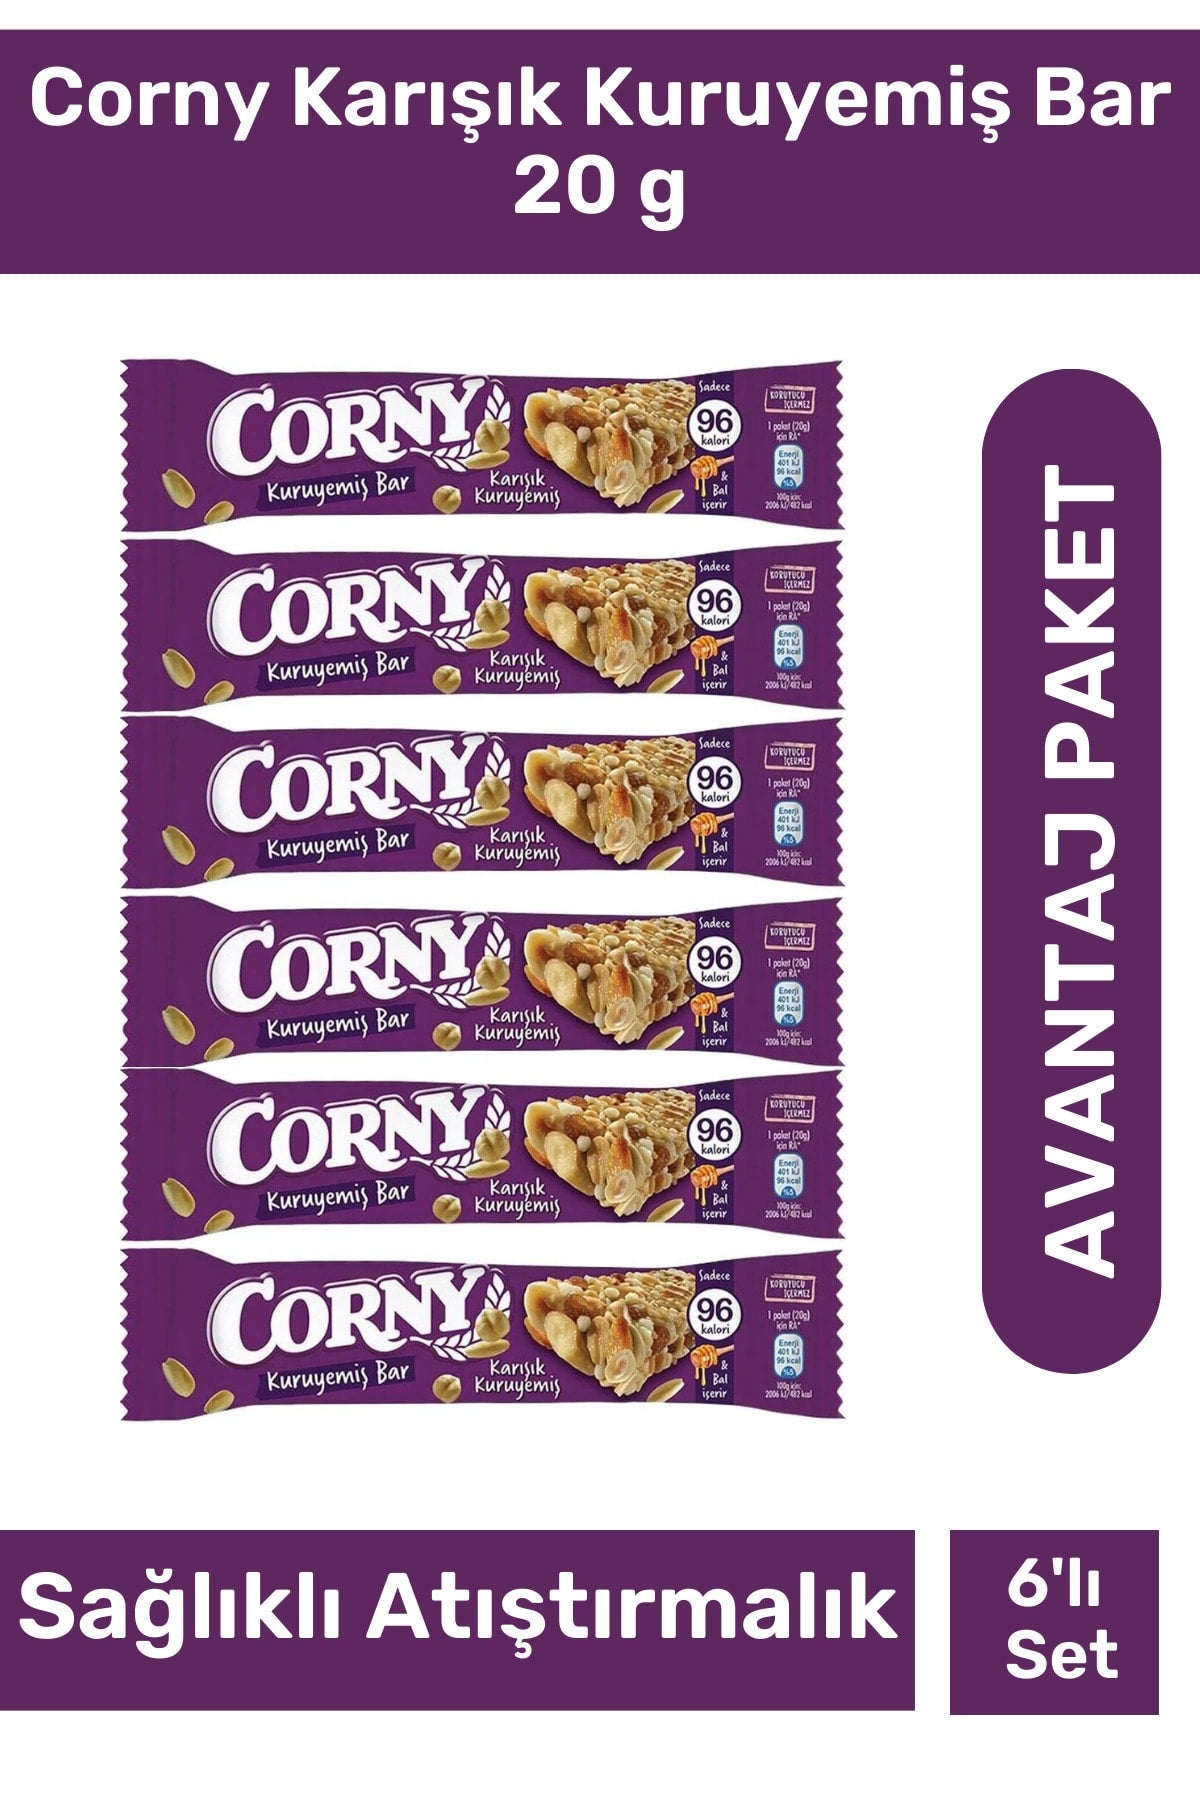 Corny Karışık Kuruyemiş Bar 20 g 6'lı Paket